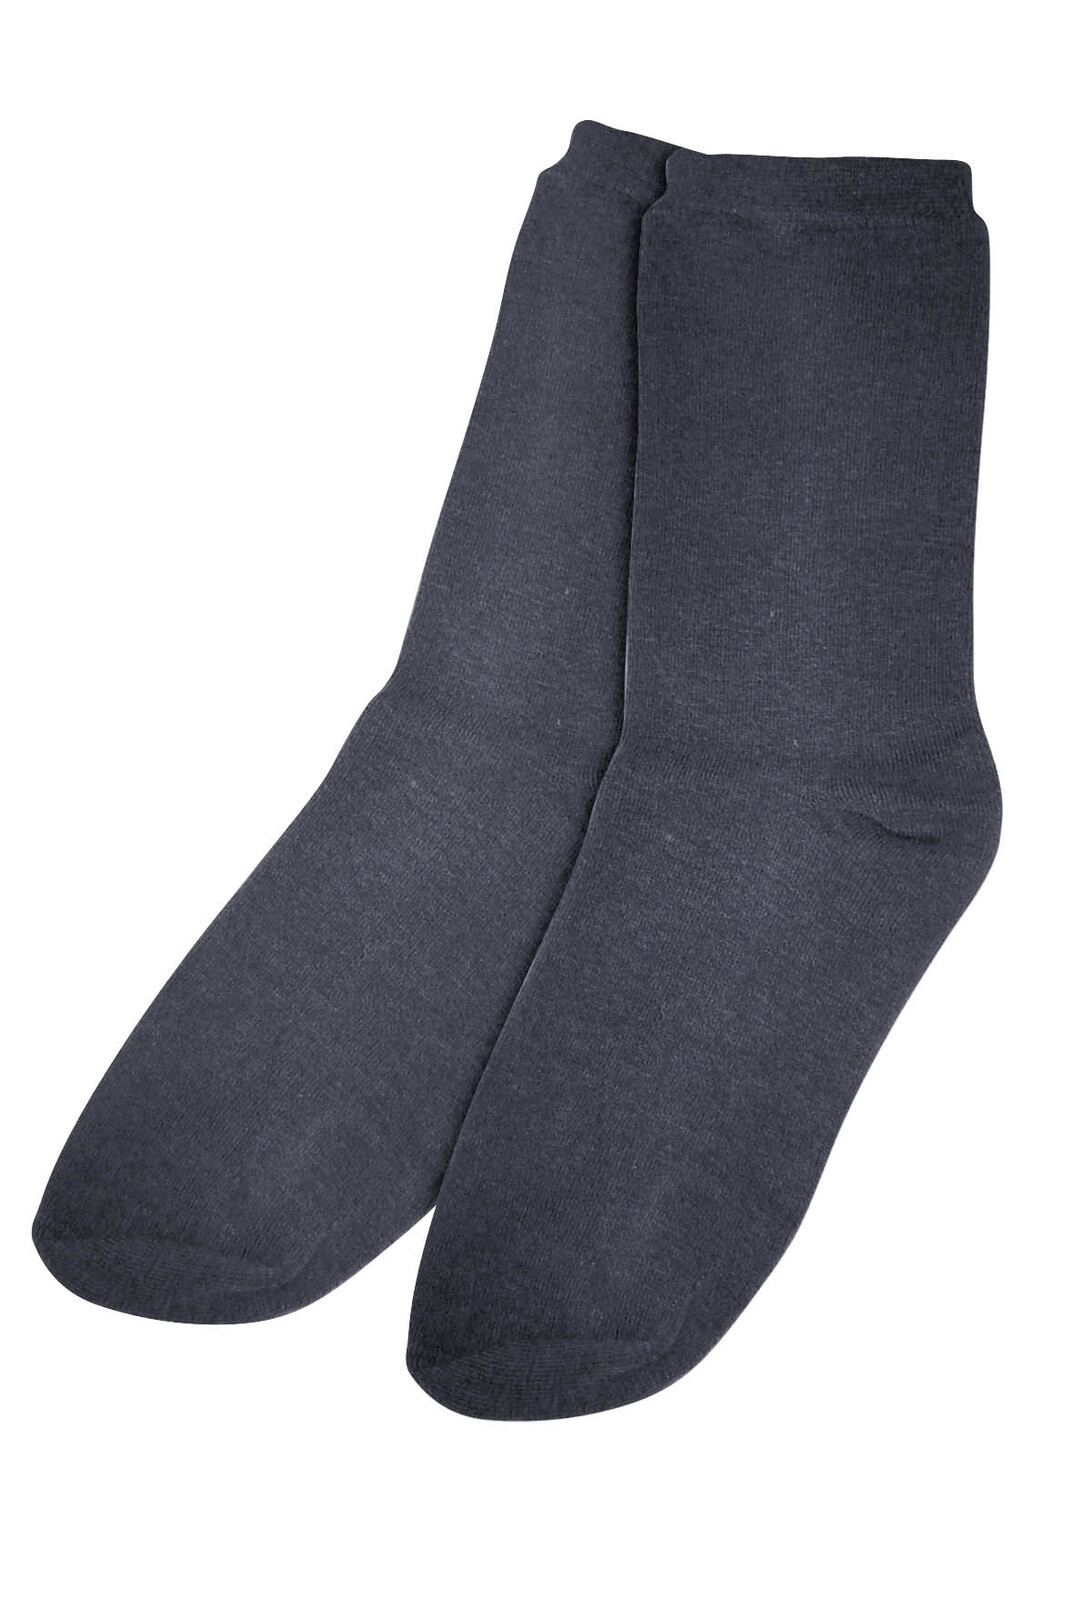 dririder-thermal-socks-